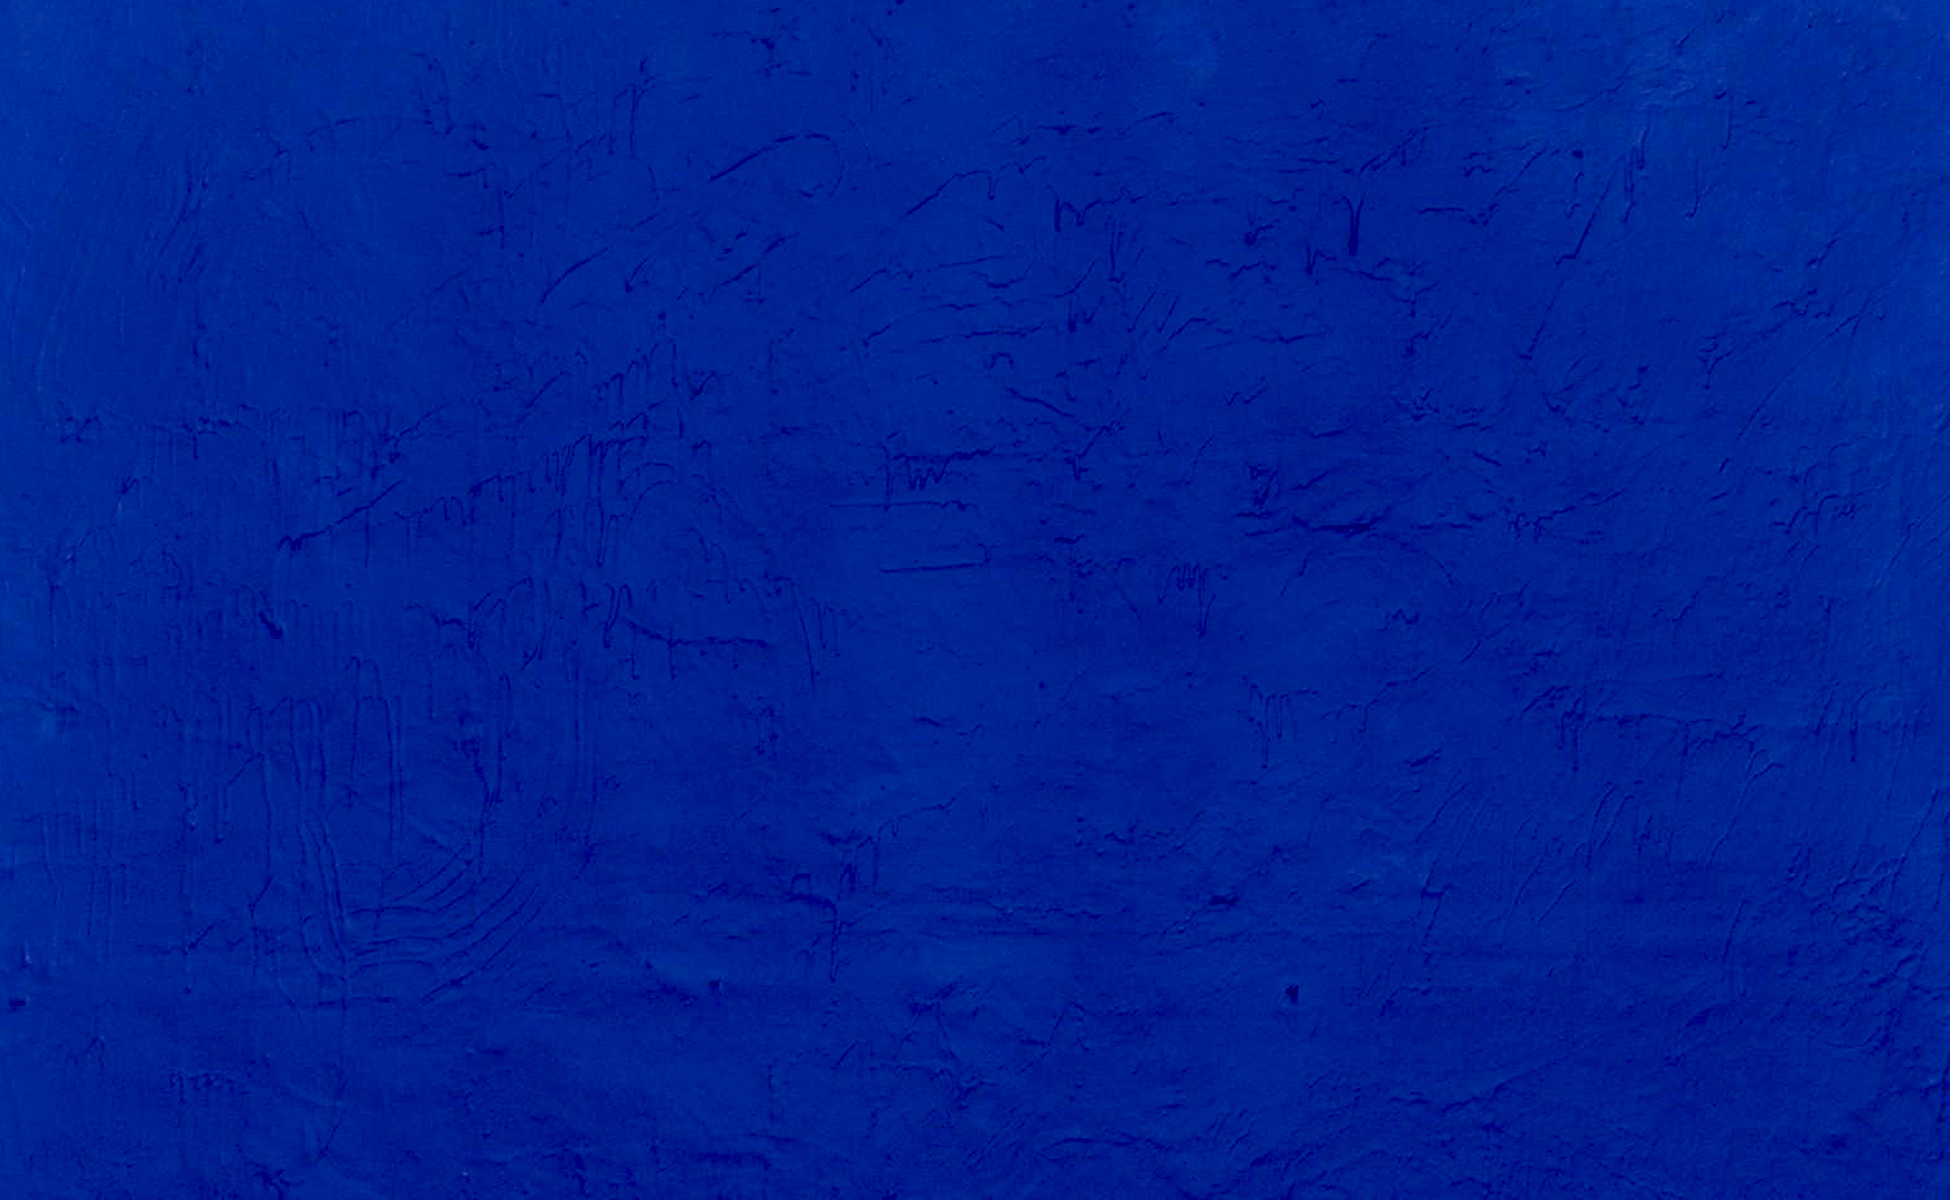 bleu-klein-ikb-1958-sans-titre-couleur-deposee-usage-exclusif